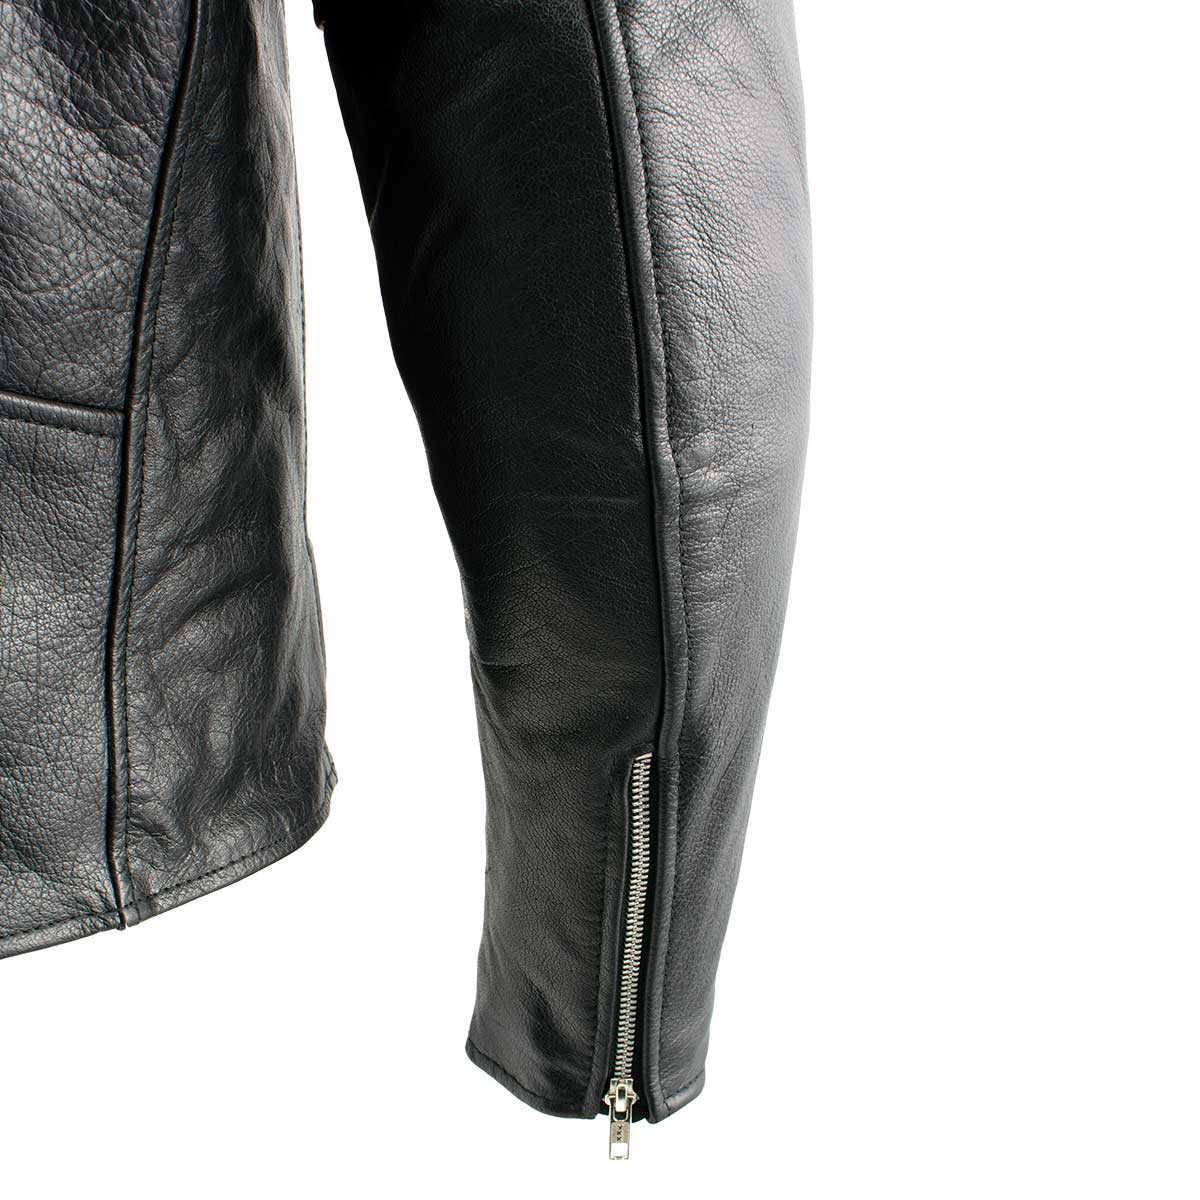 X Element Men's Leather Motorcycle Jacket